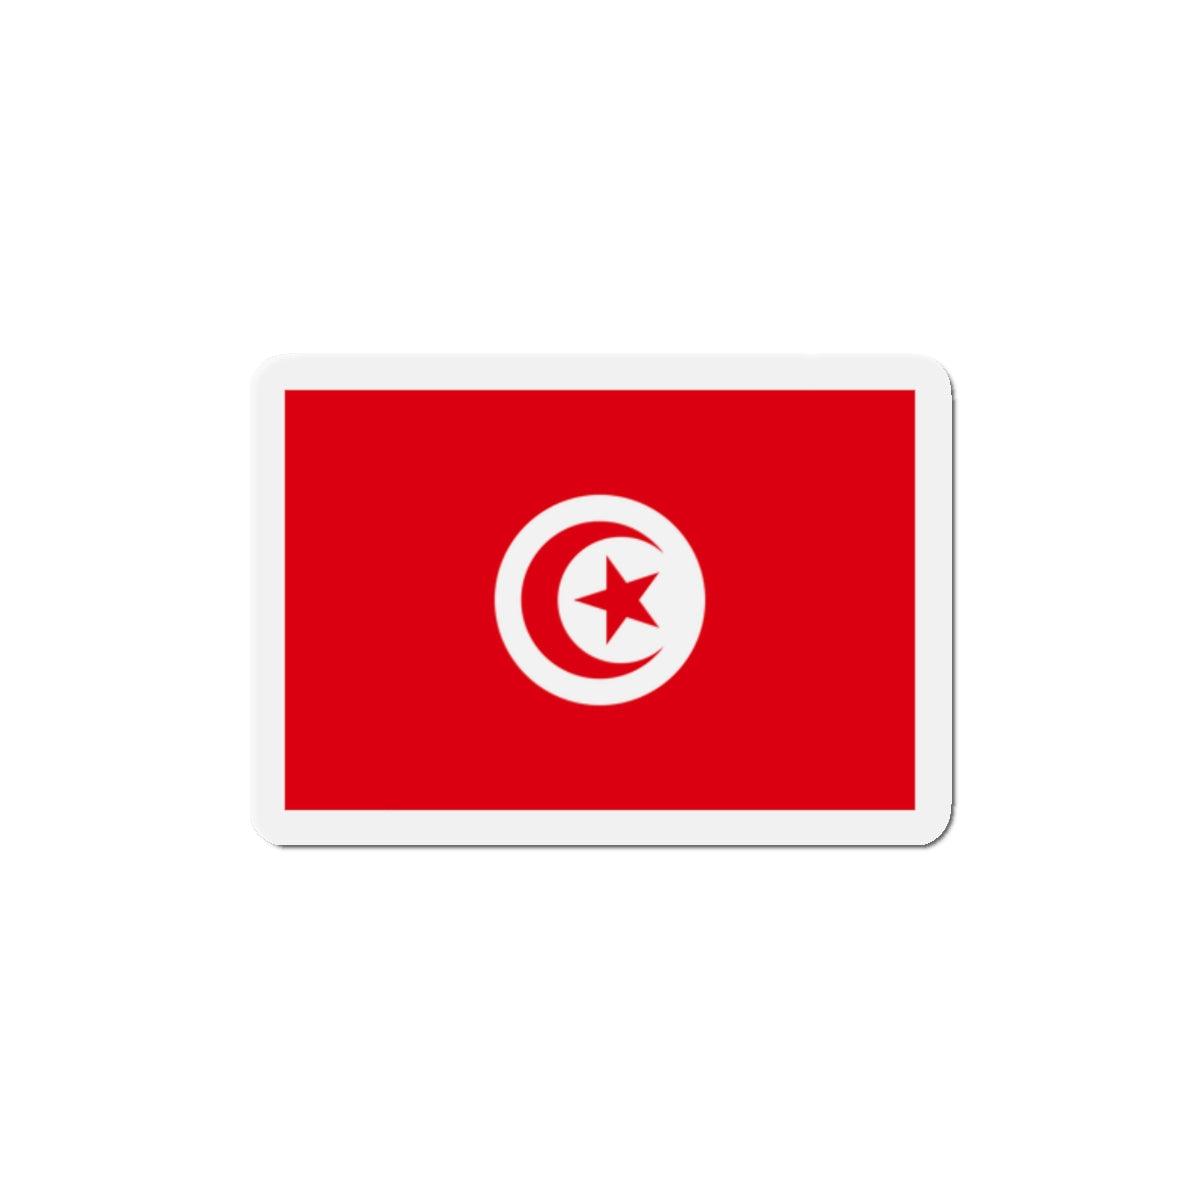 Aimant Drapeau de la Tunisie en plusieurs taiiles - Pixelforma 